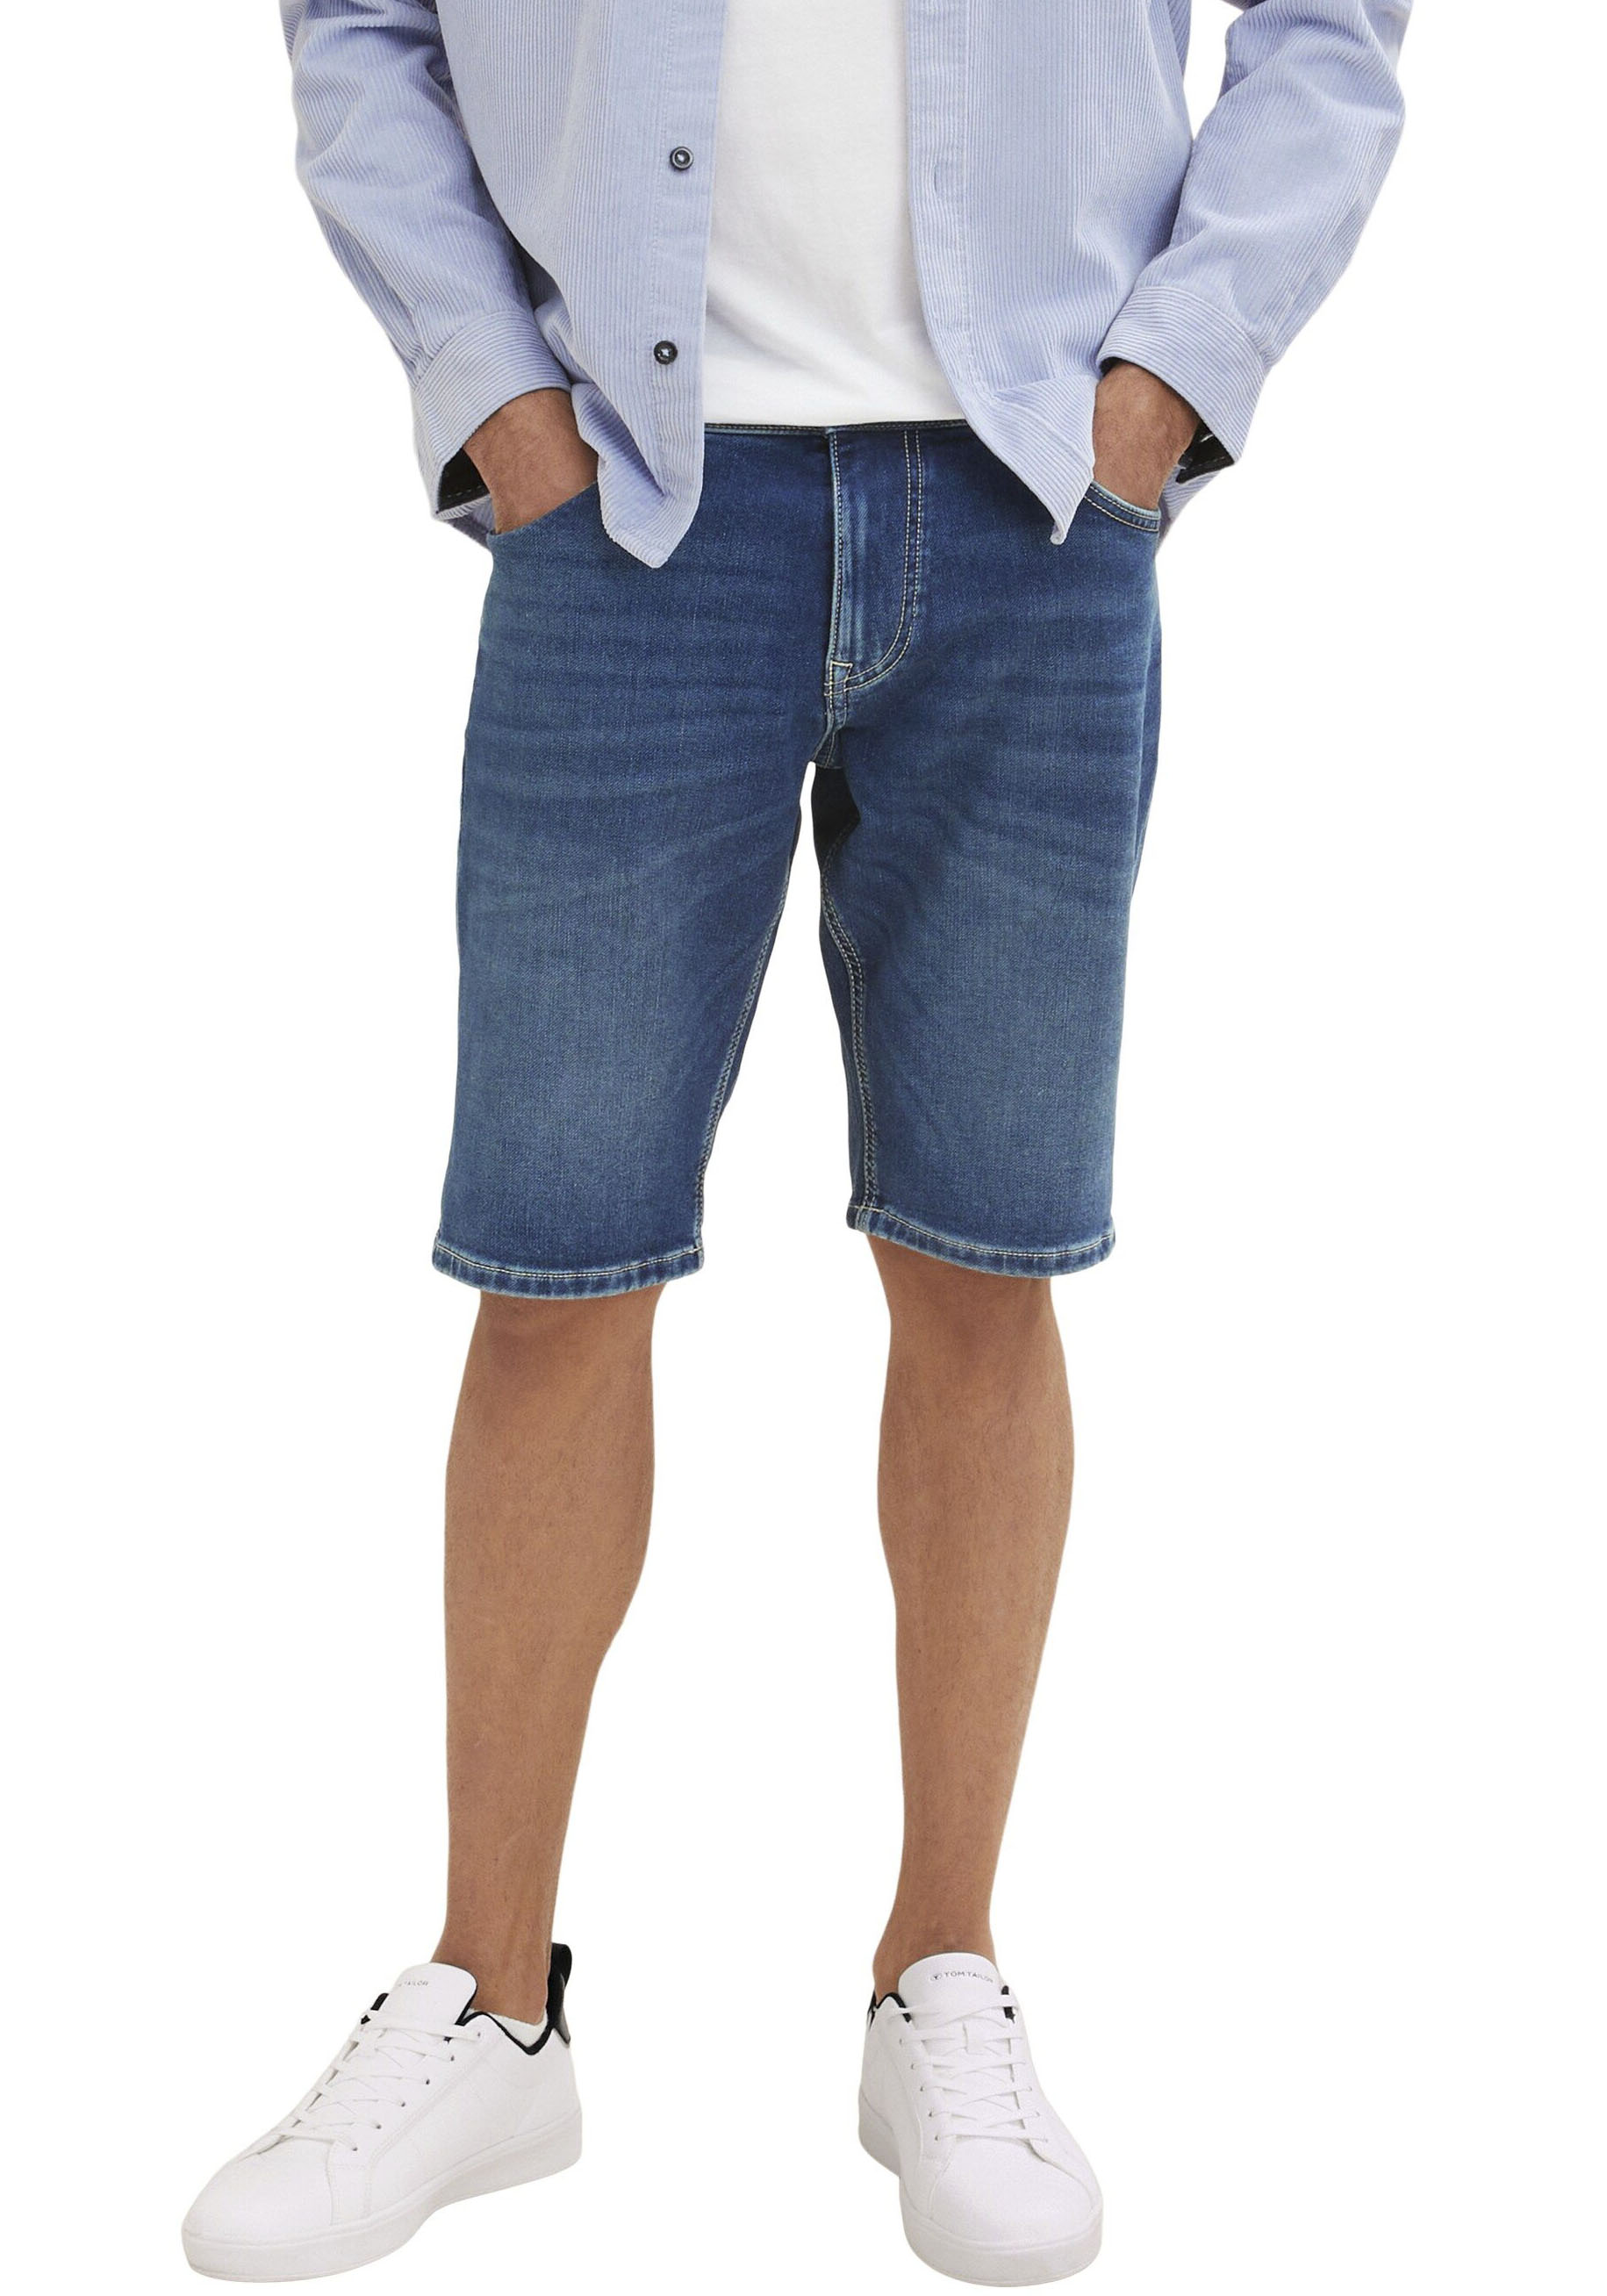 Jeans Shorts - jetzt shoppen online Modetrends aktuelle